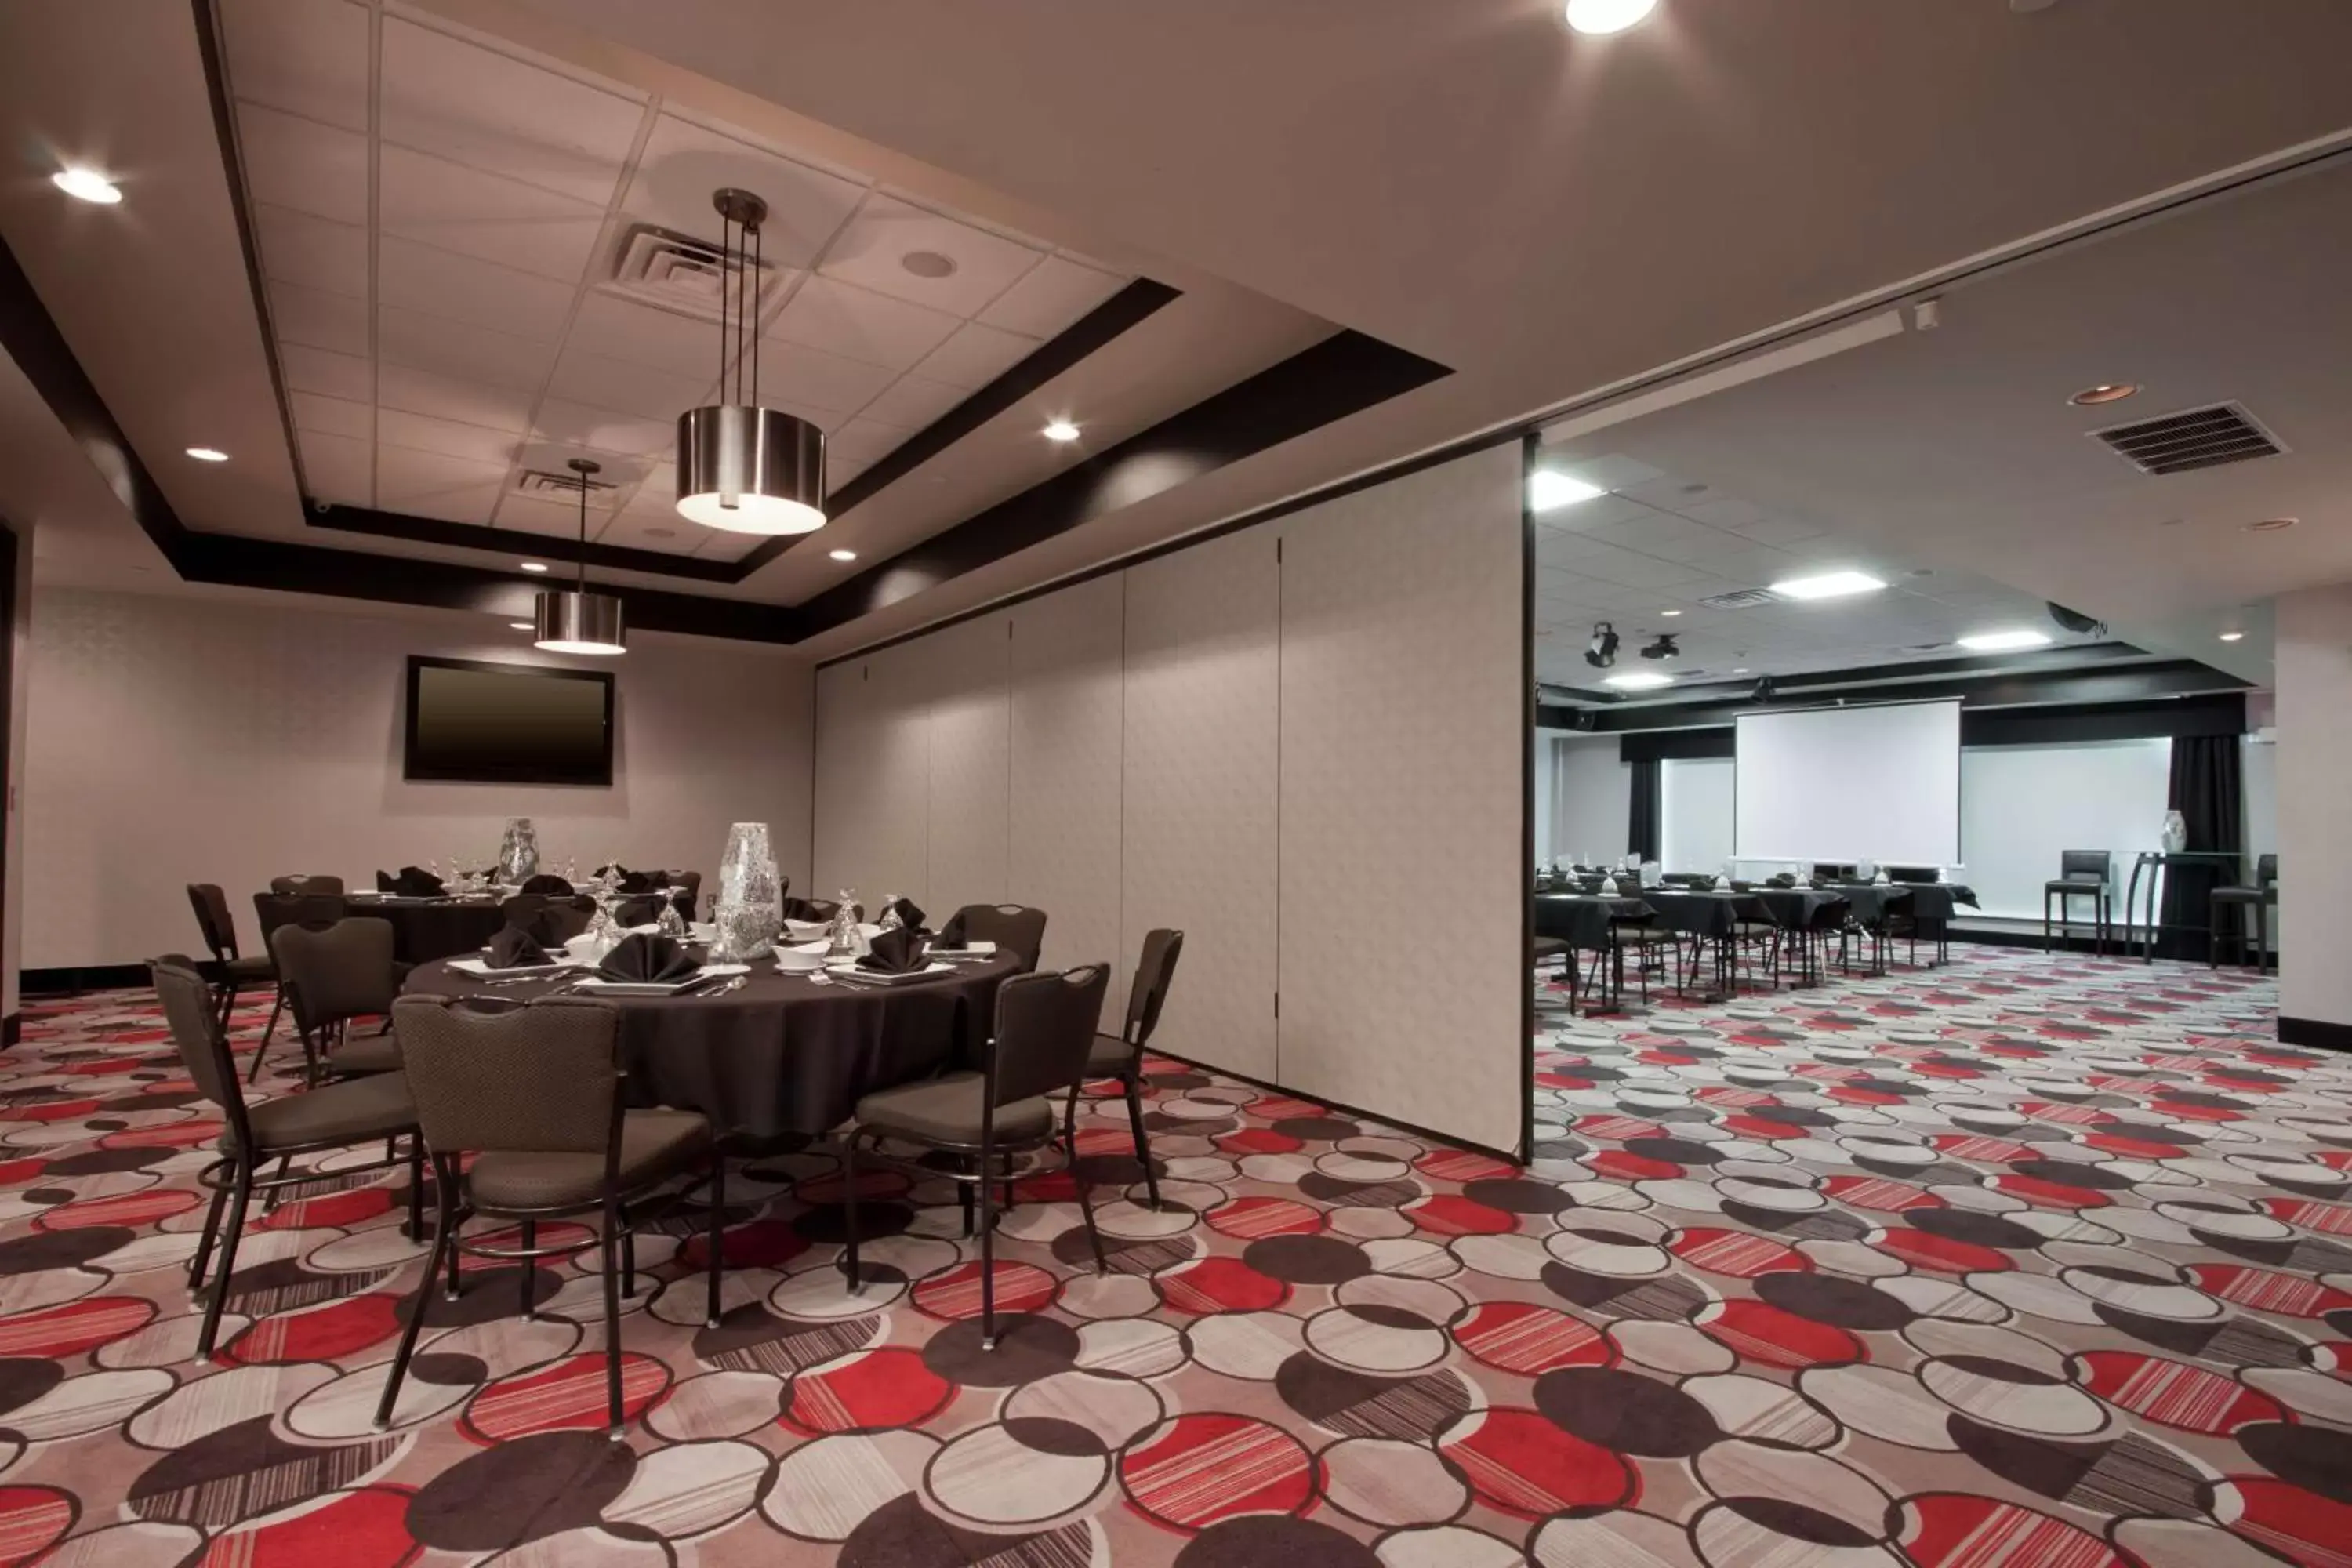 Meeting/conference room, Banquet Facilities in Hilton Garden Inn Oklahoma City Midtown